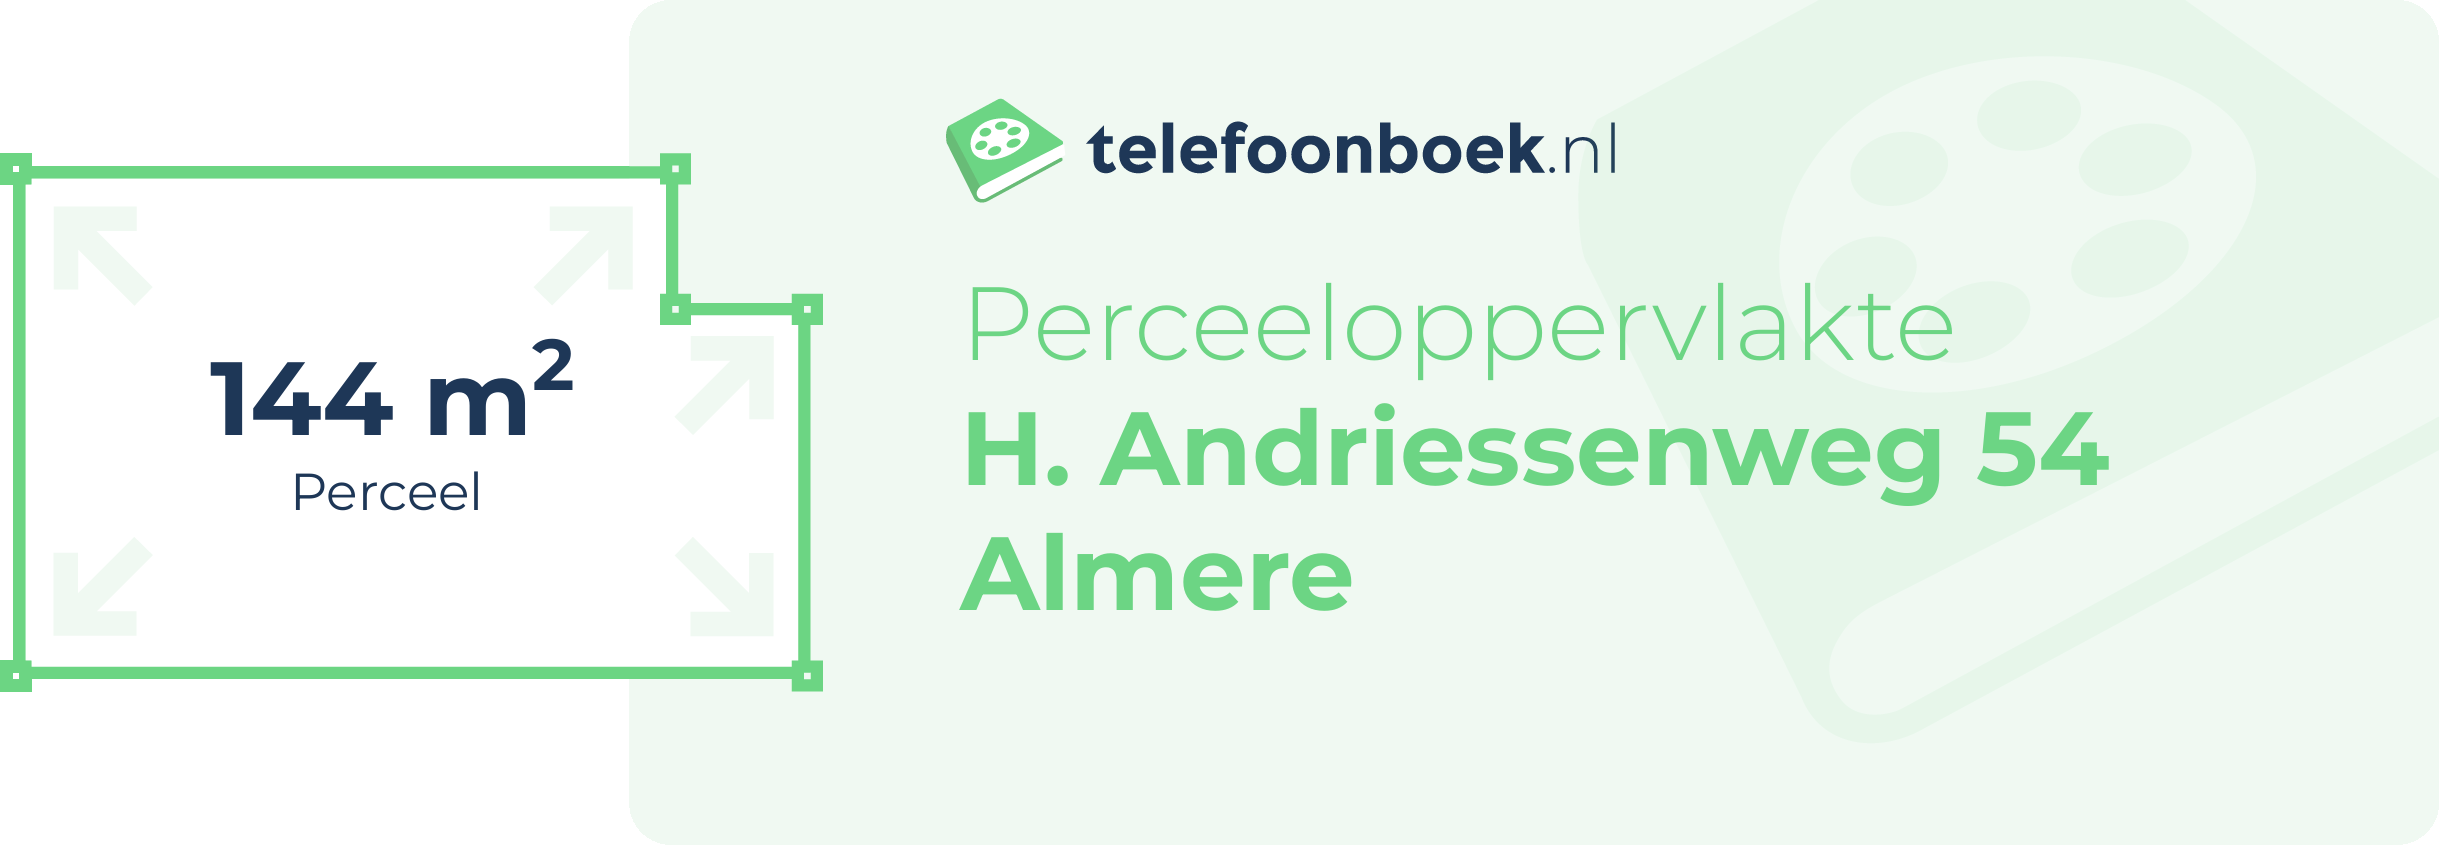 Perceeloppervlakte H. Andriessenweg 54 Almere